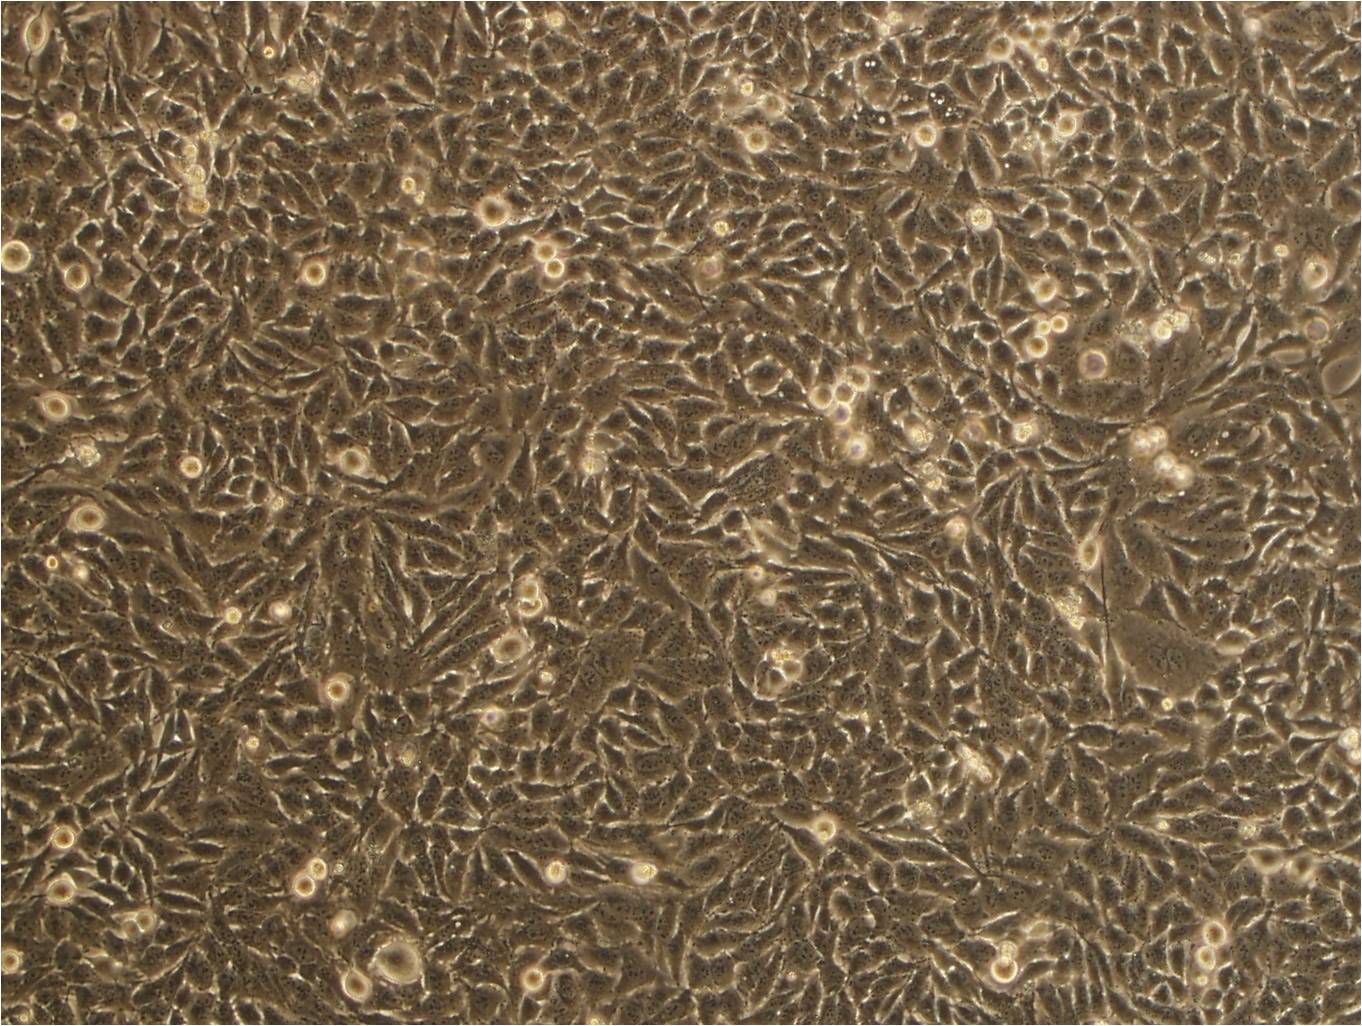 CT26 Cell|小鼠结肠癌细胞